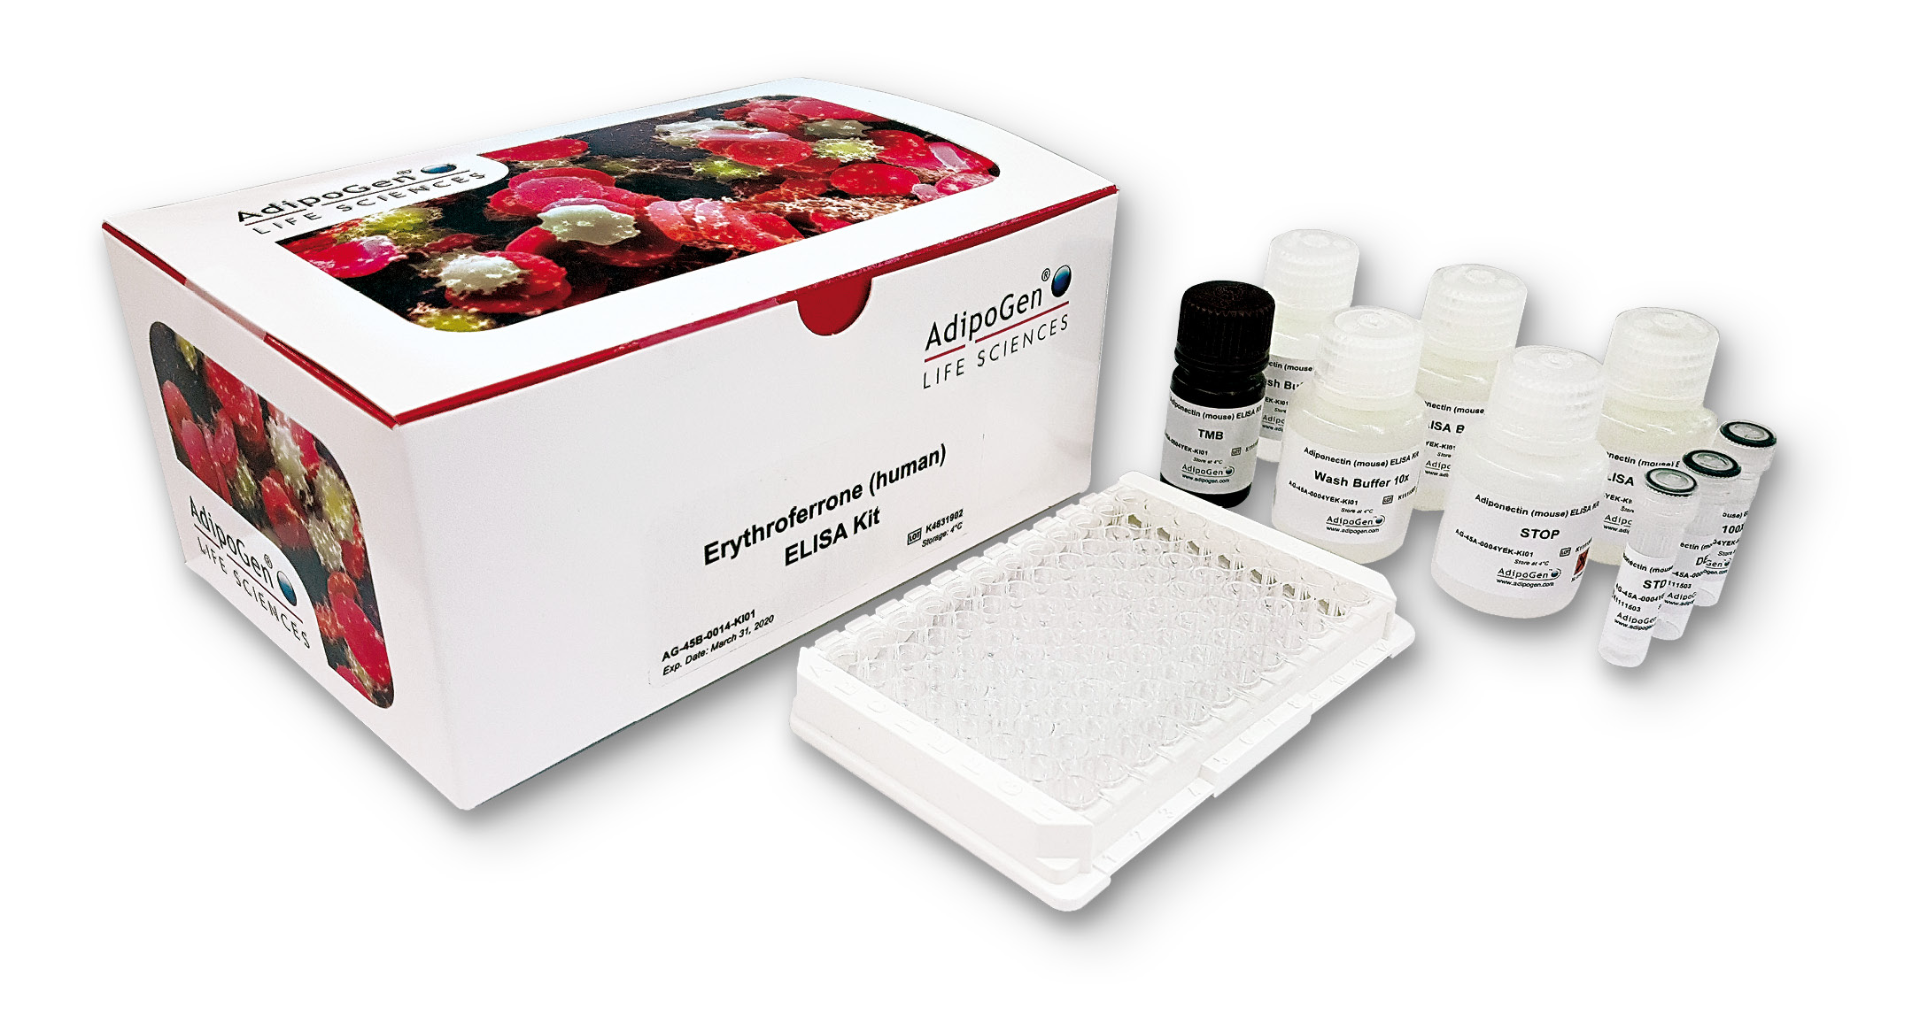 Erythroferrone (human) ELISA Kit